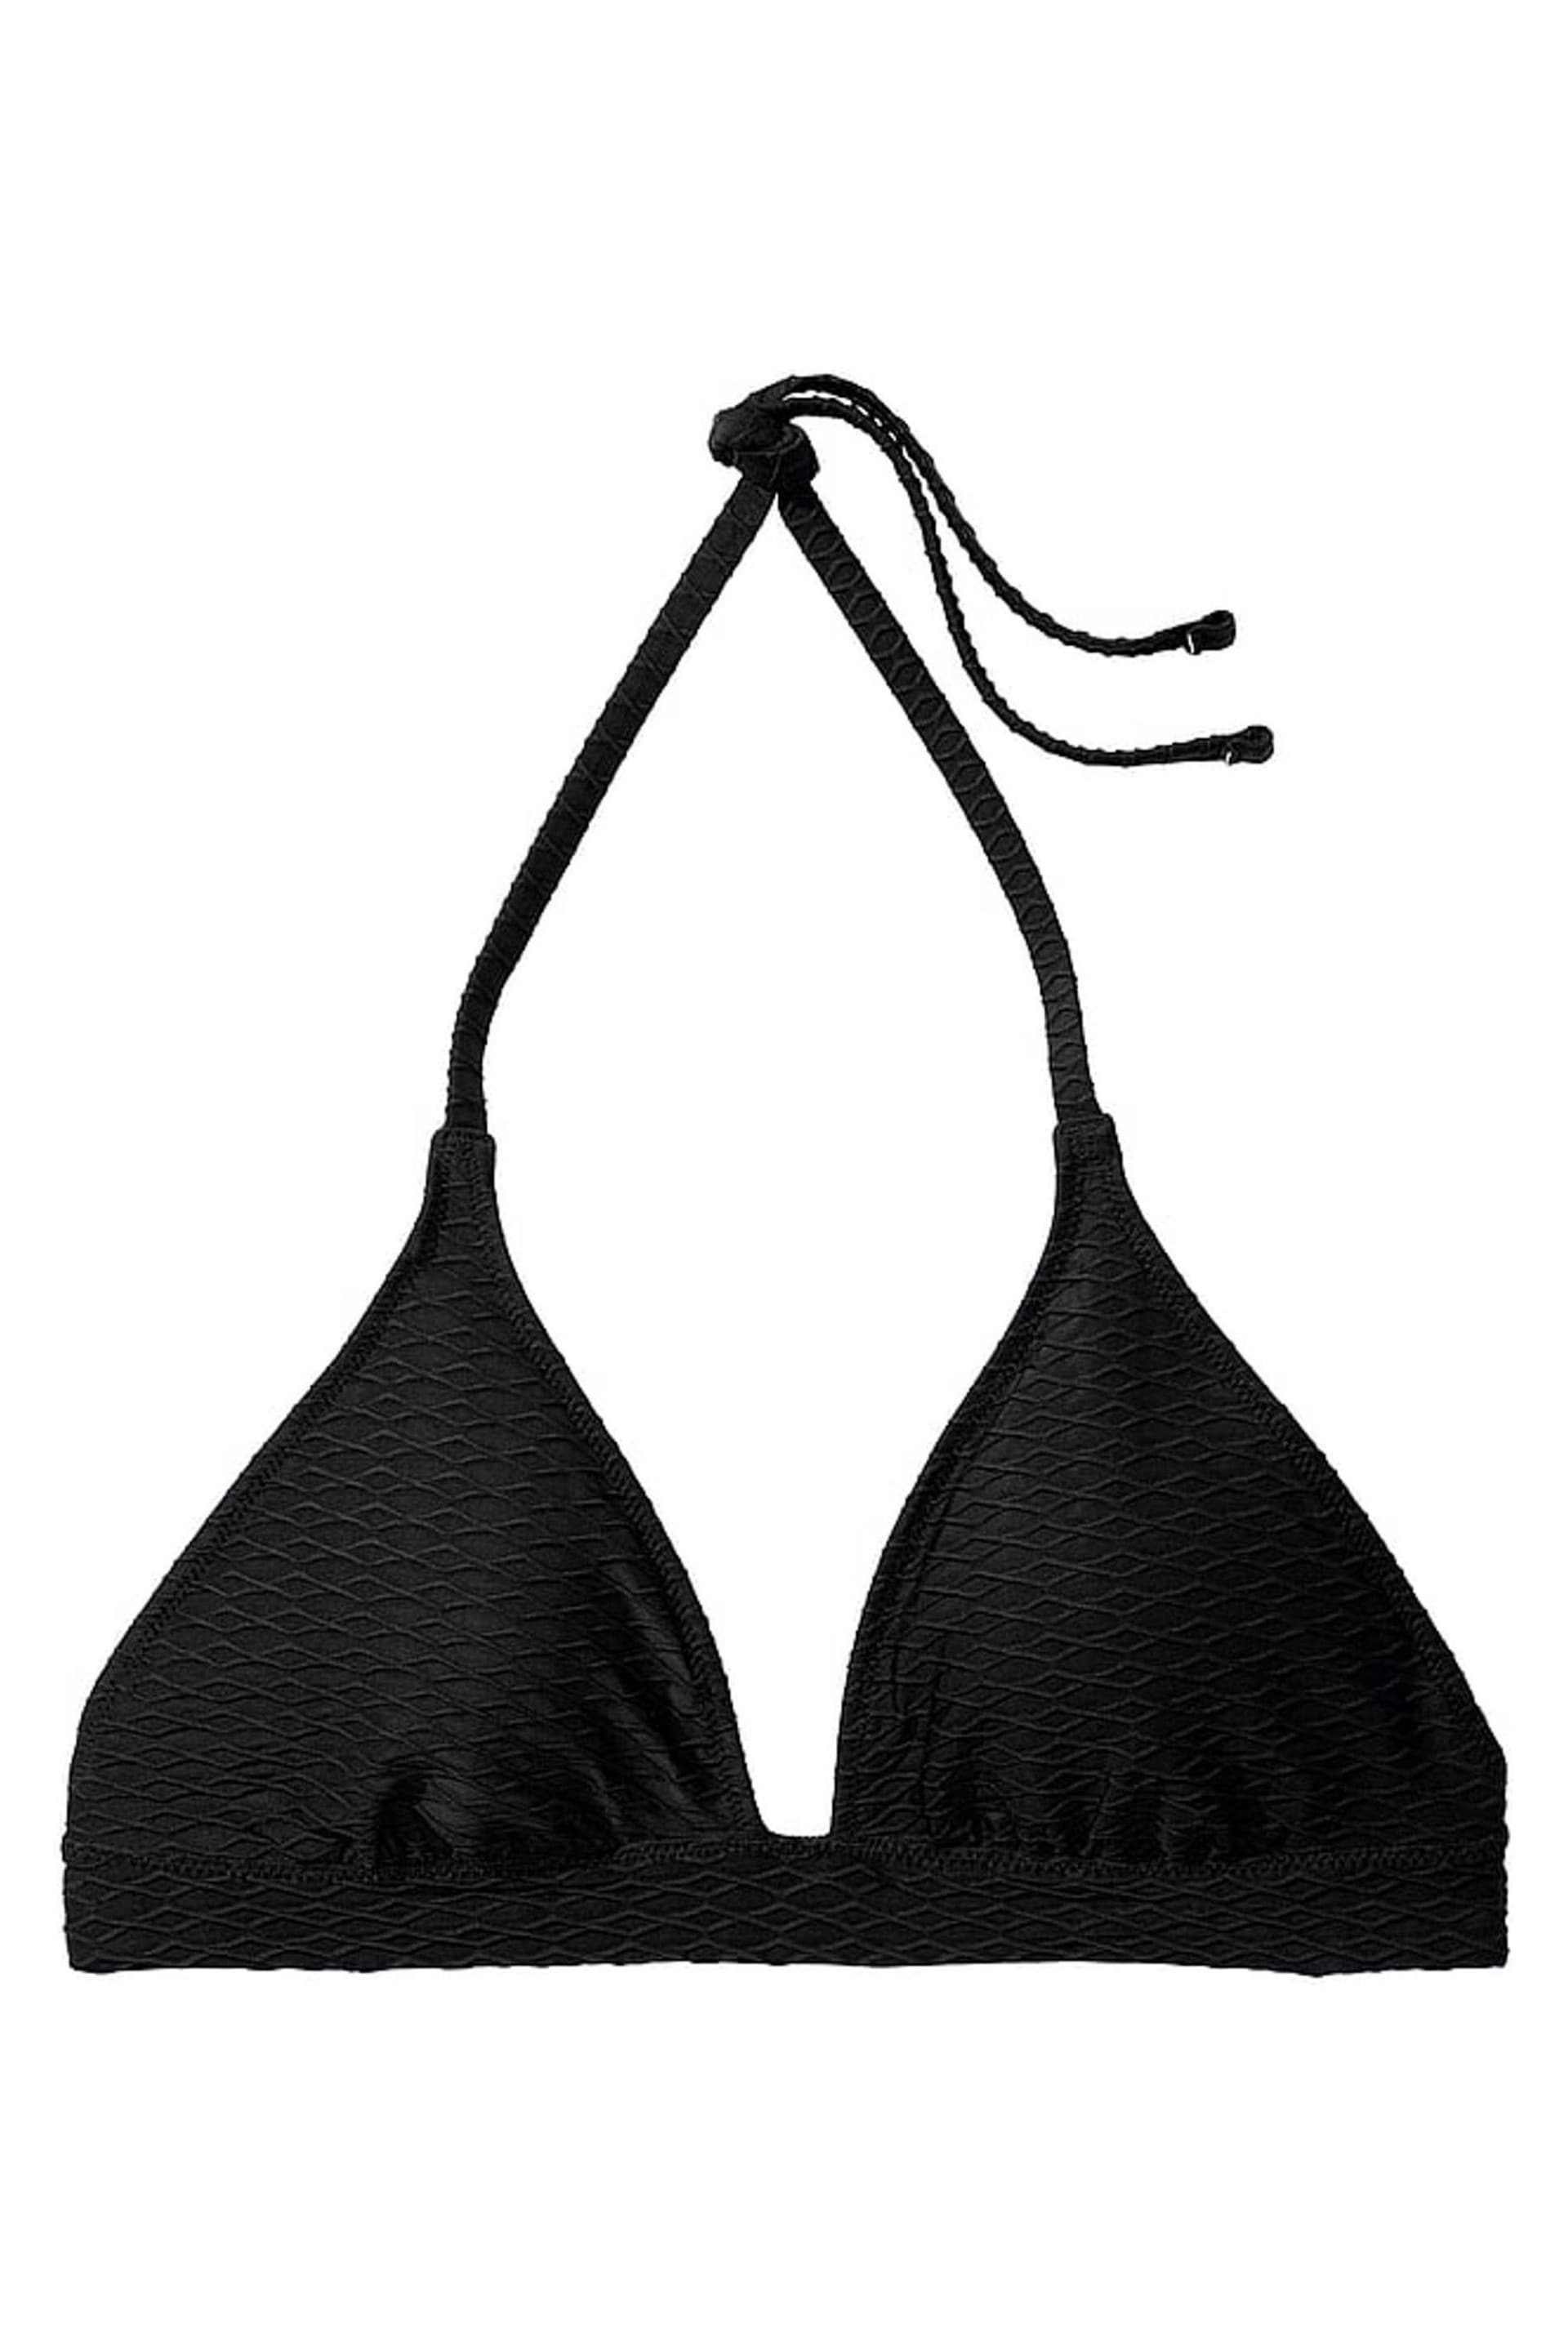 Victoria's Secret Black Fishnet Halter Swim Bikini Top - Image 3 of 3